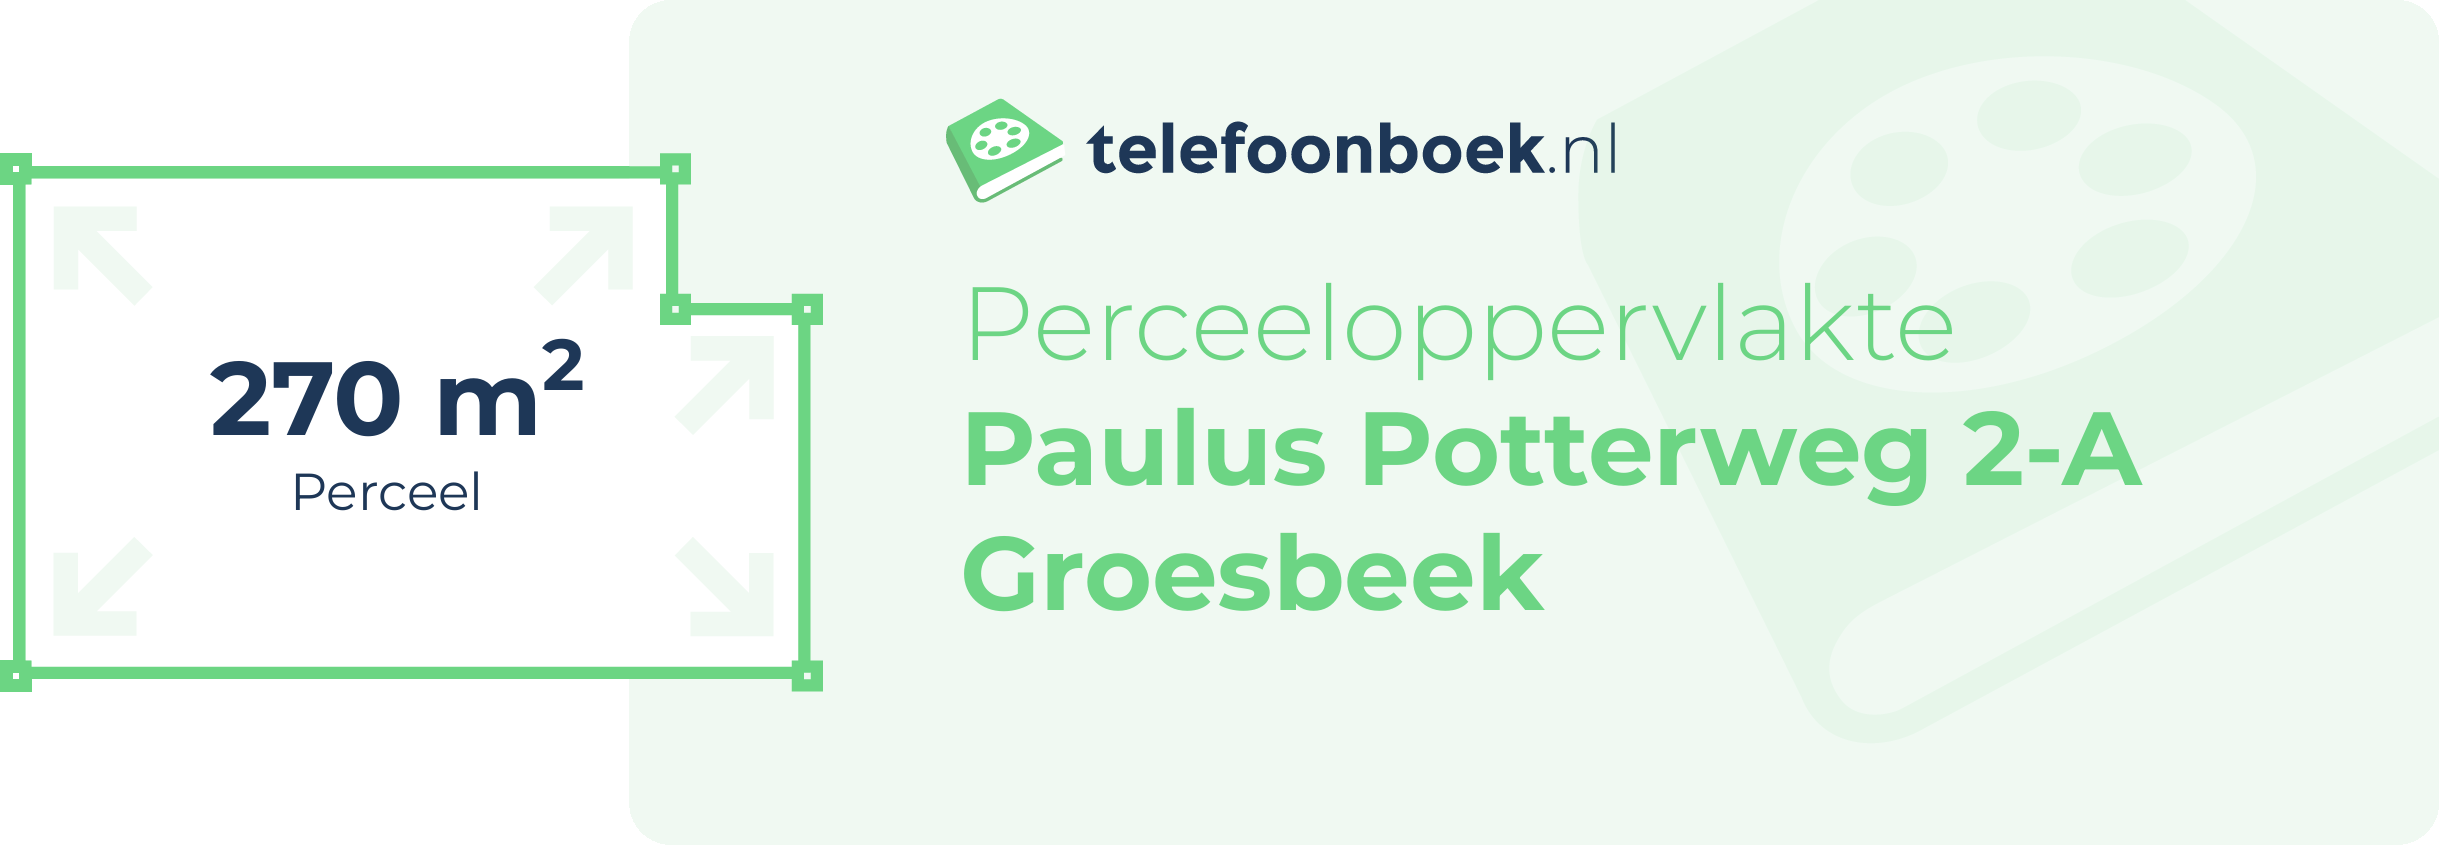 Perceeloppervlakte Paulus Potterweg 2-A Groesbeek